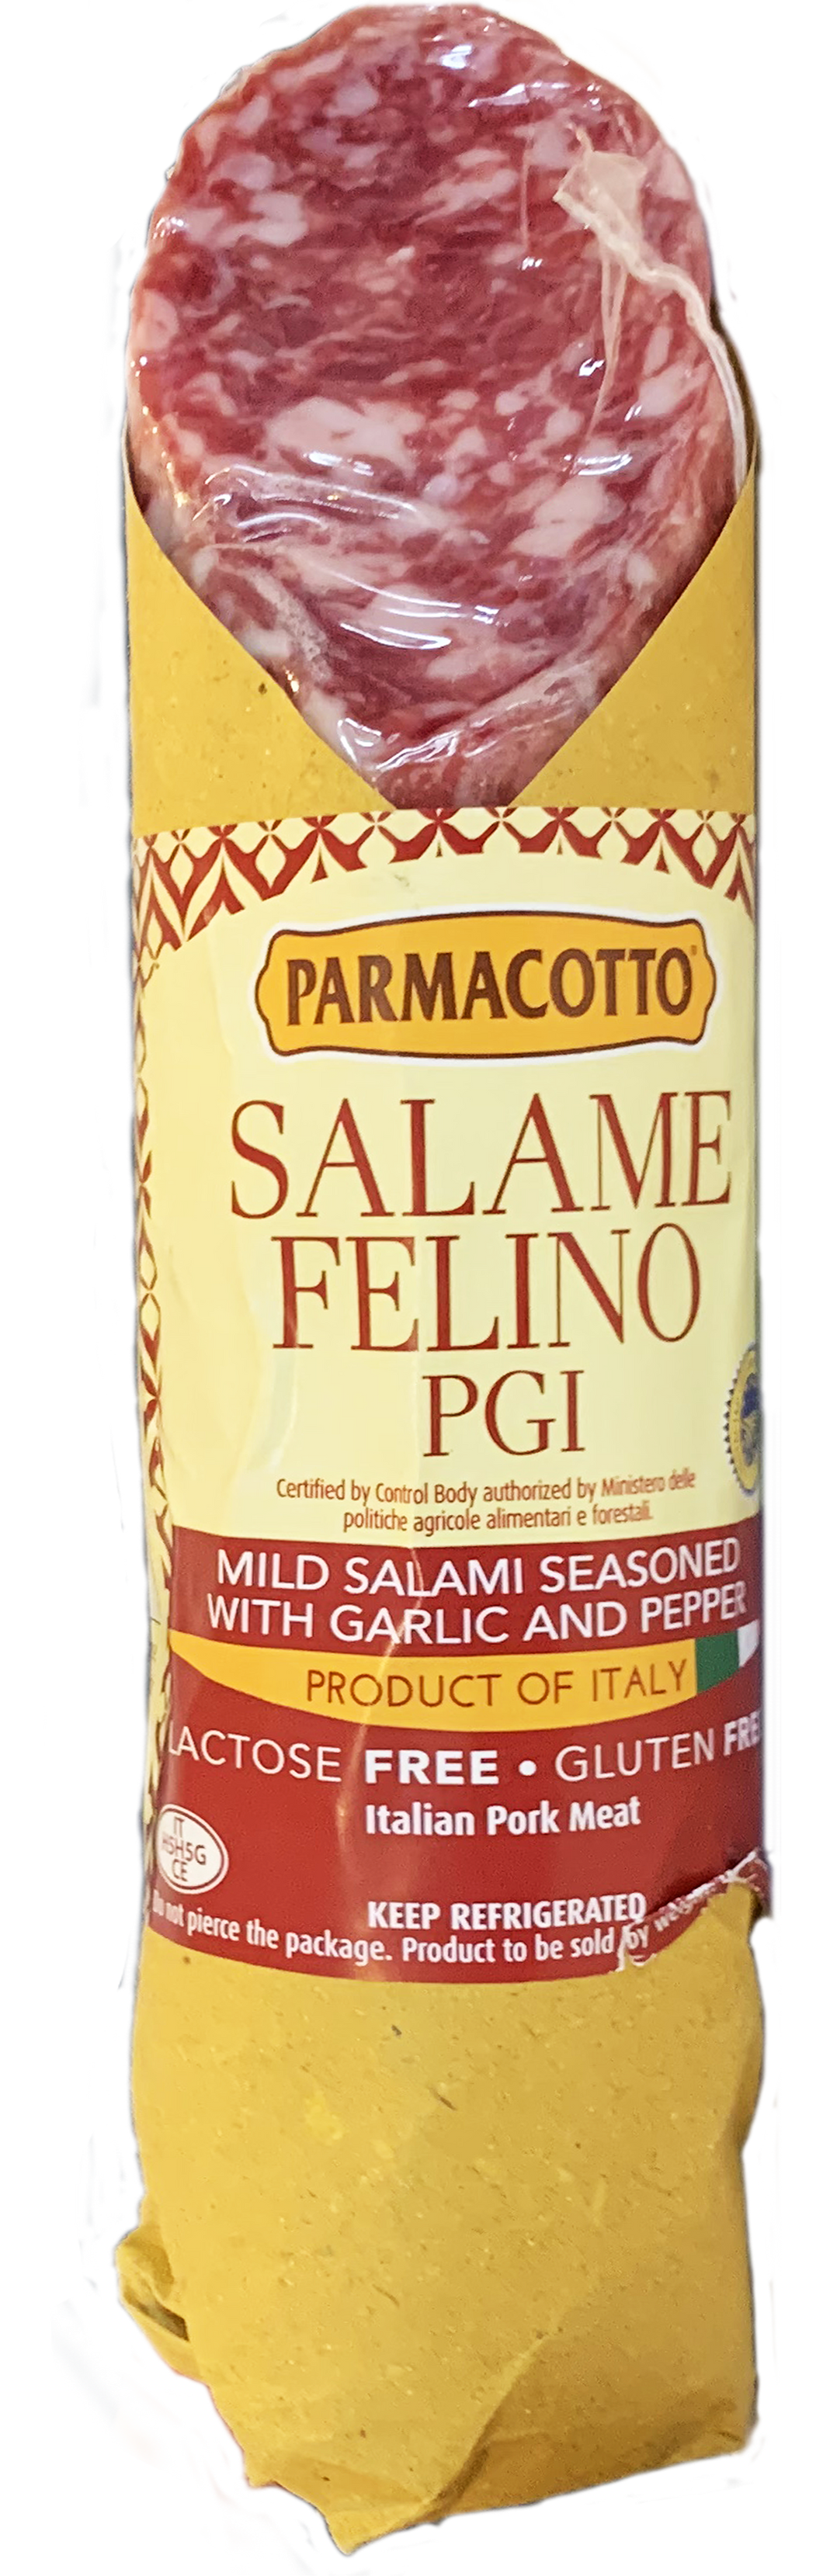 Salame Felino P.G.I. (Approx. 0.9lb)